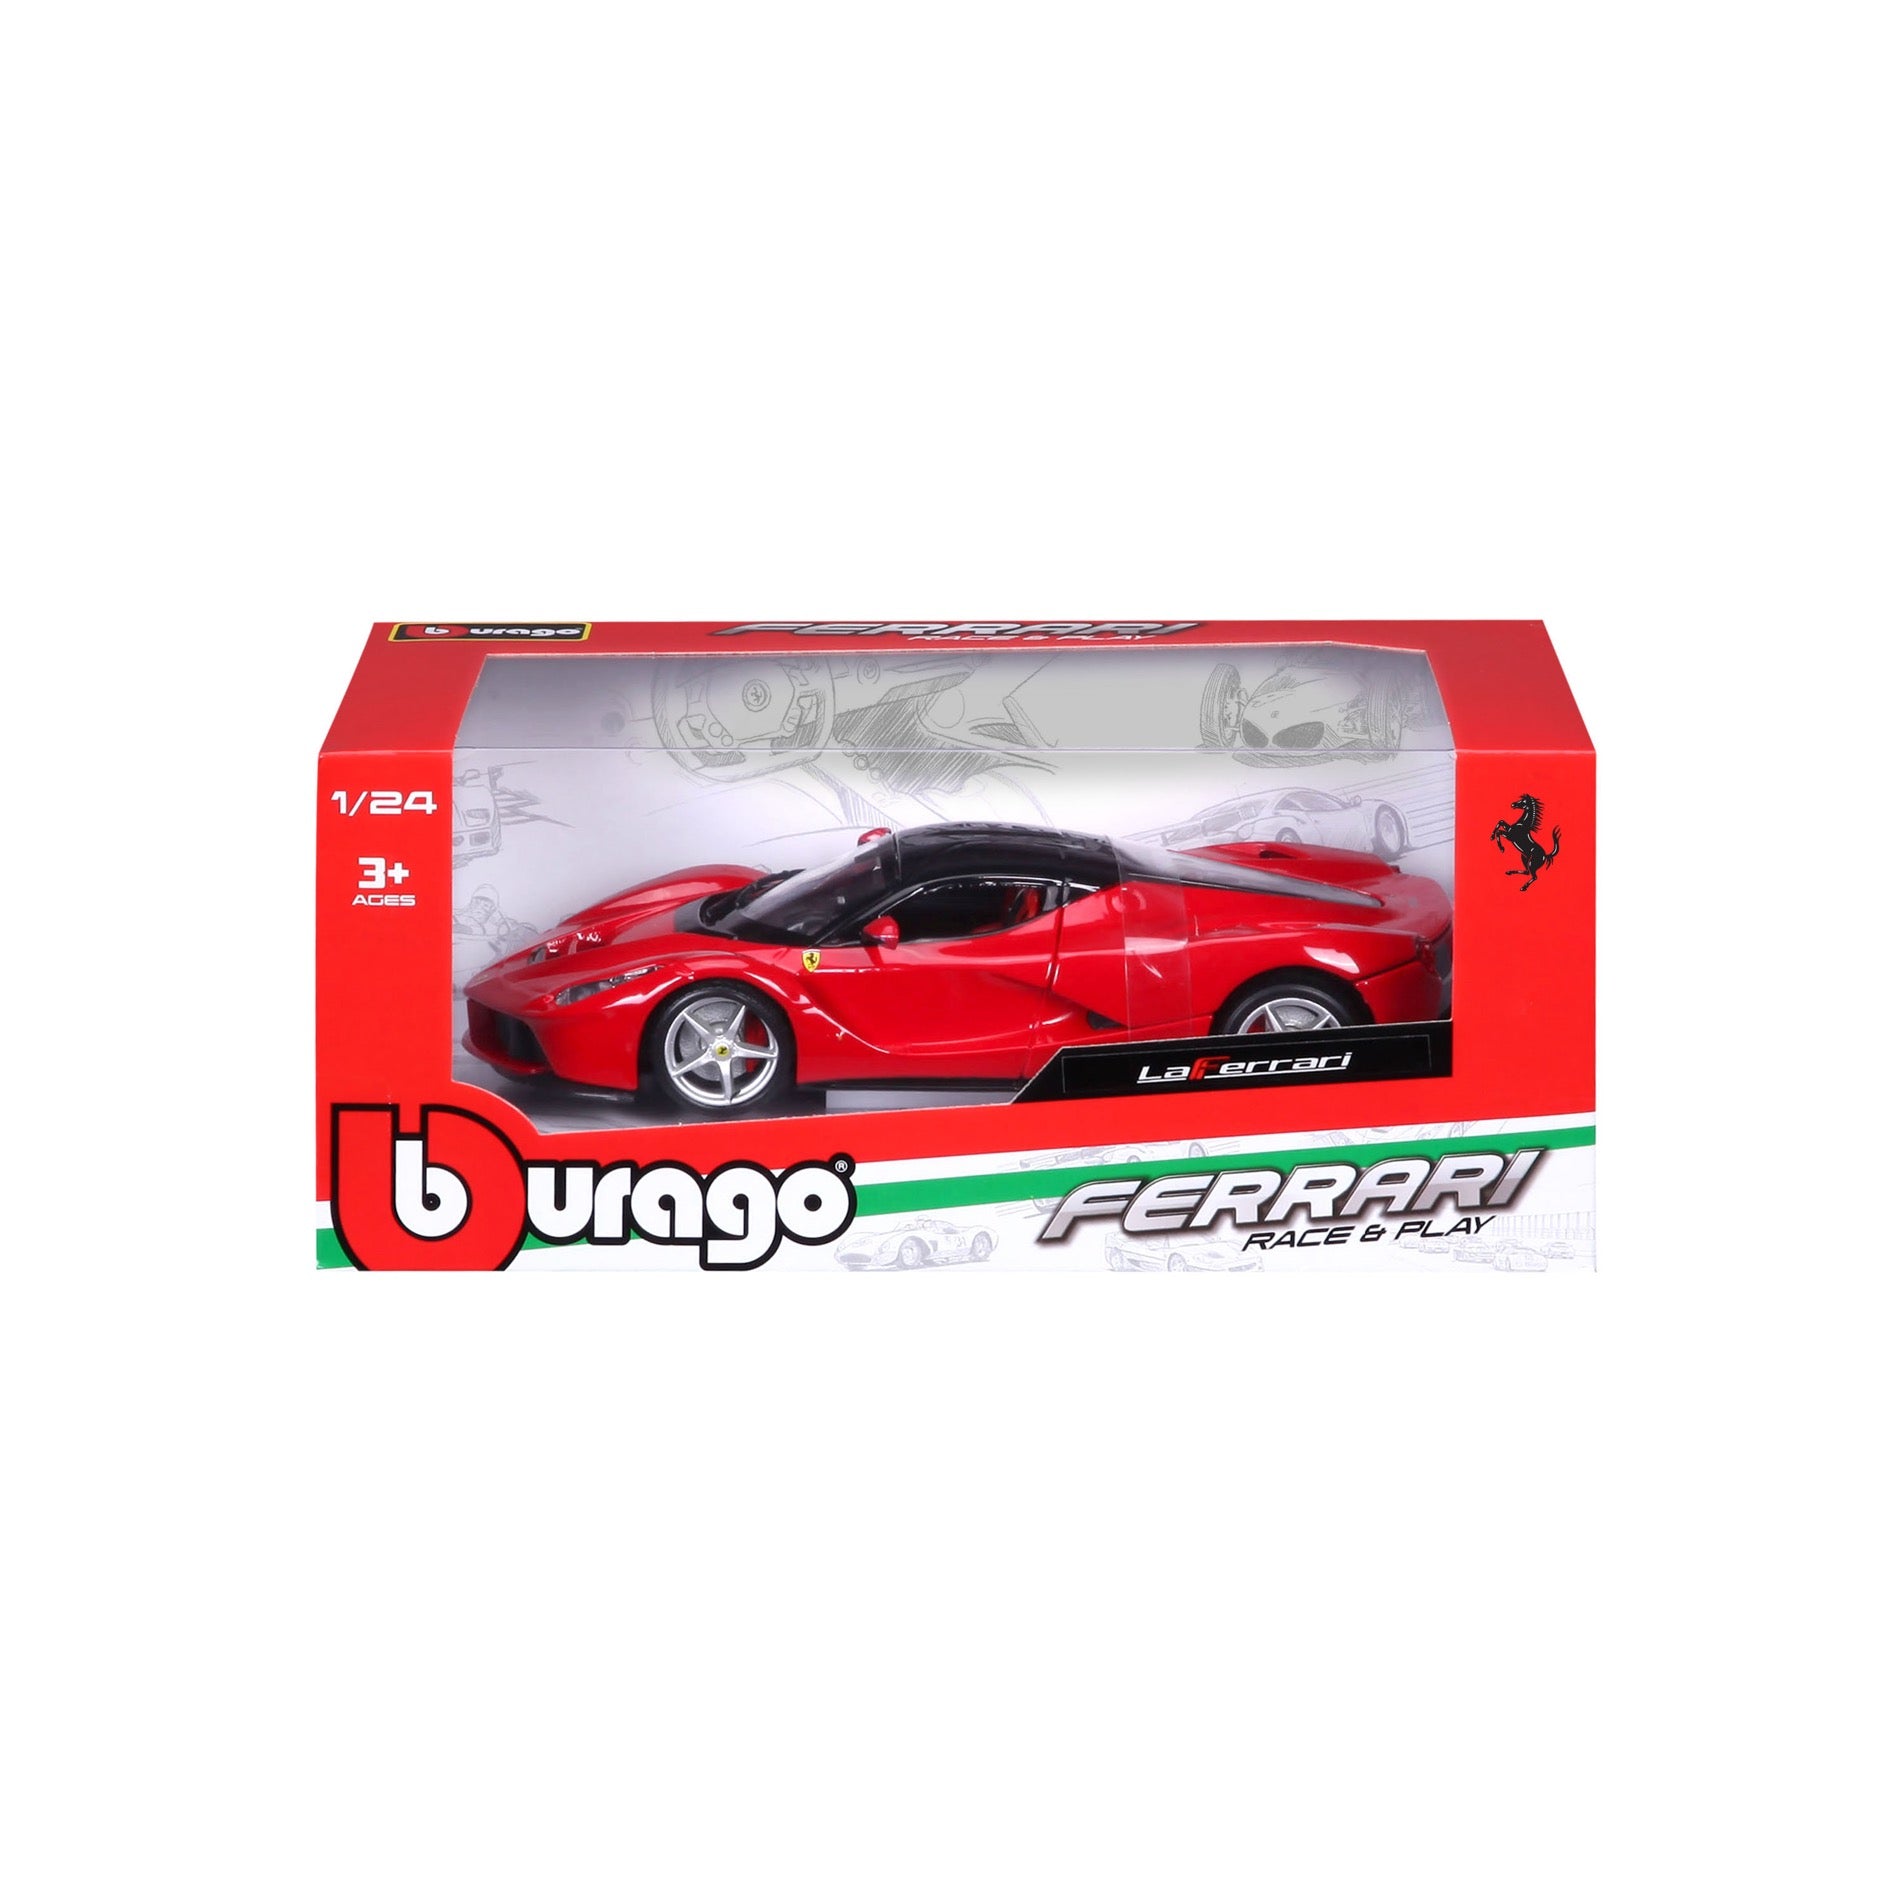 Bburago 1:18 Scale La Ferrari Diecast Vehicle